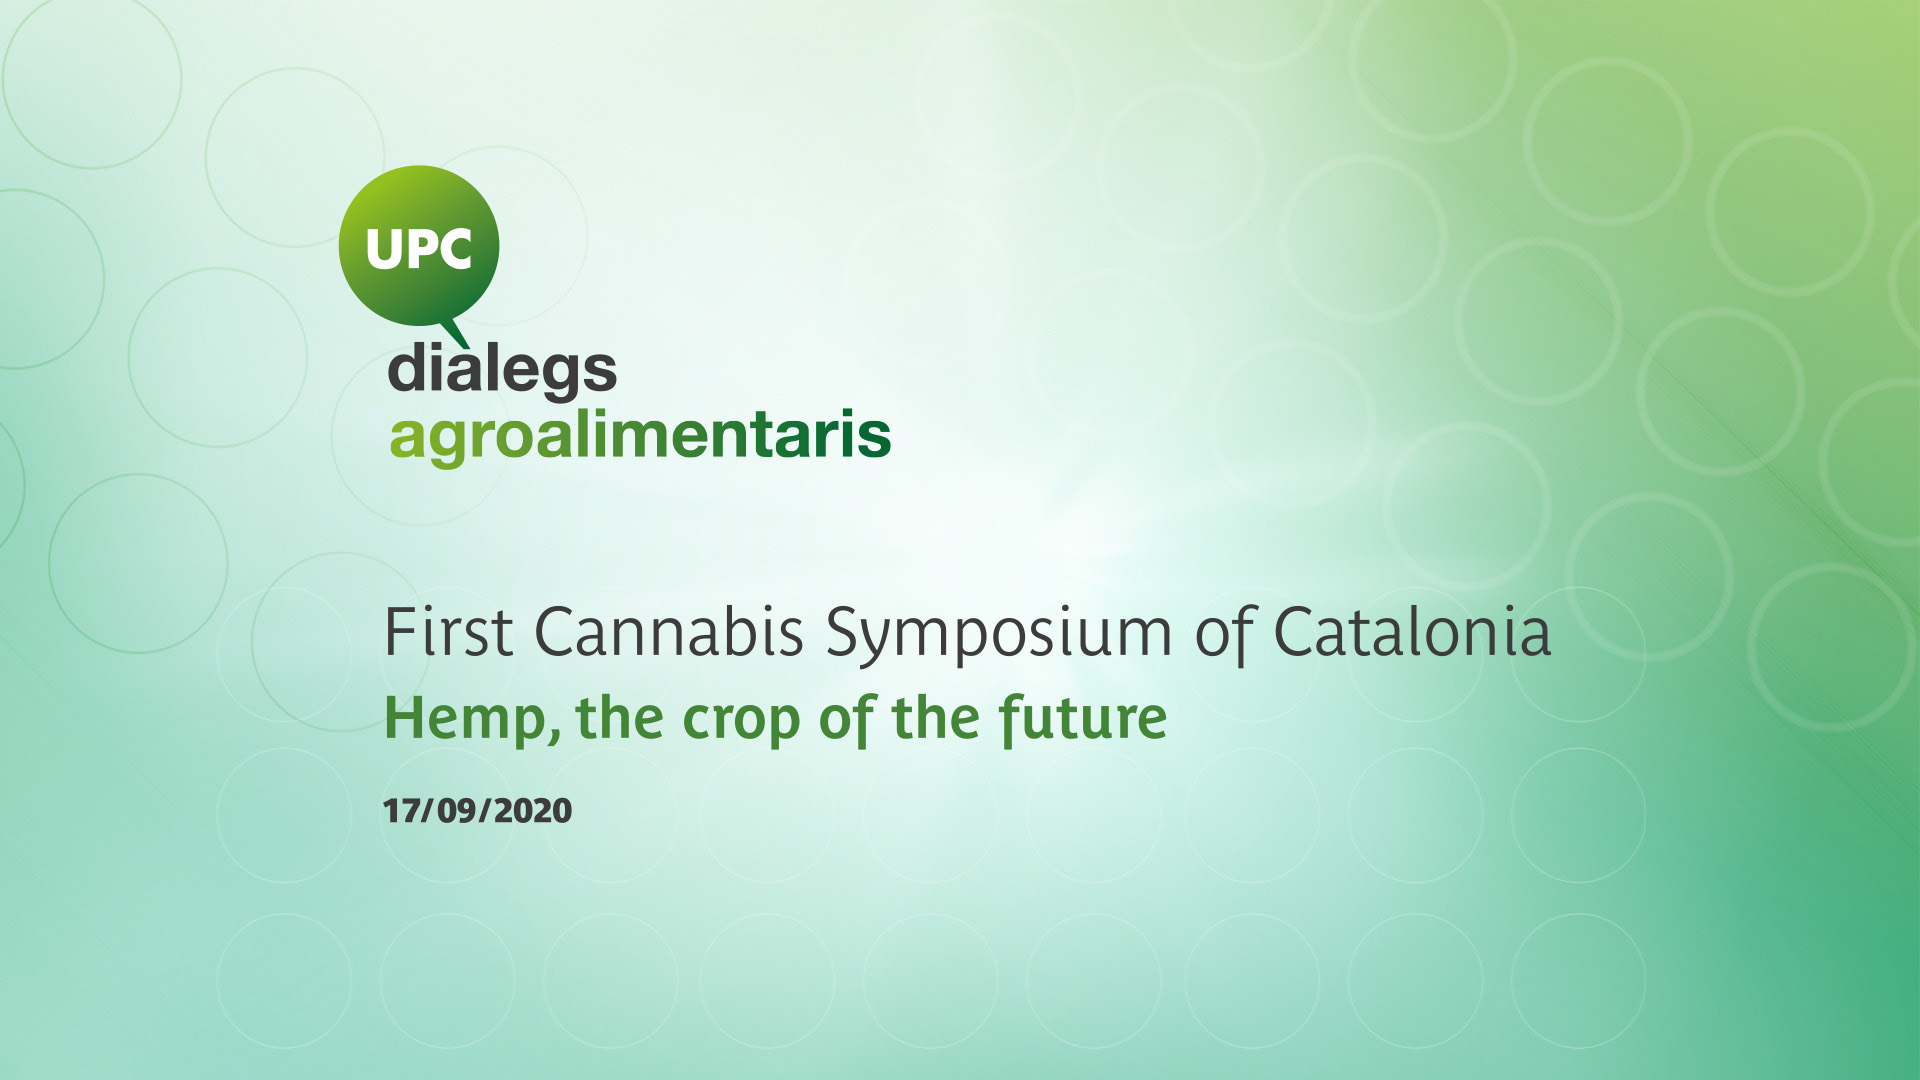 UPC Diàlegs: First Cannabis Symposium of Catalonia